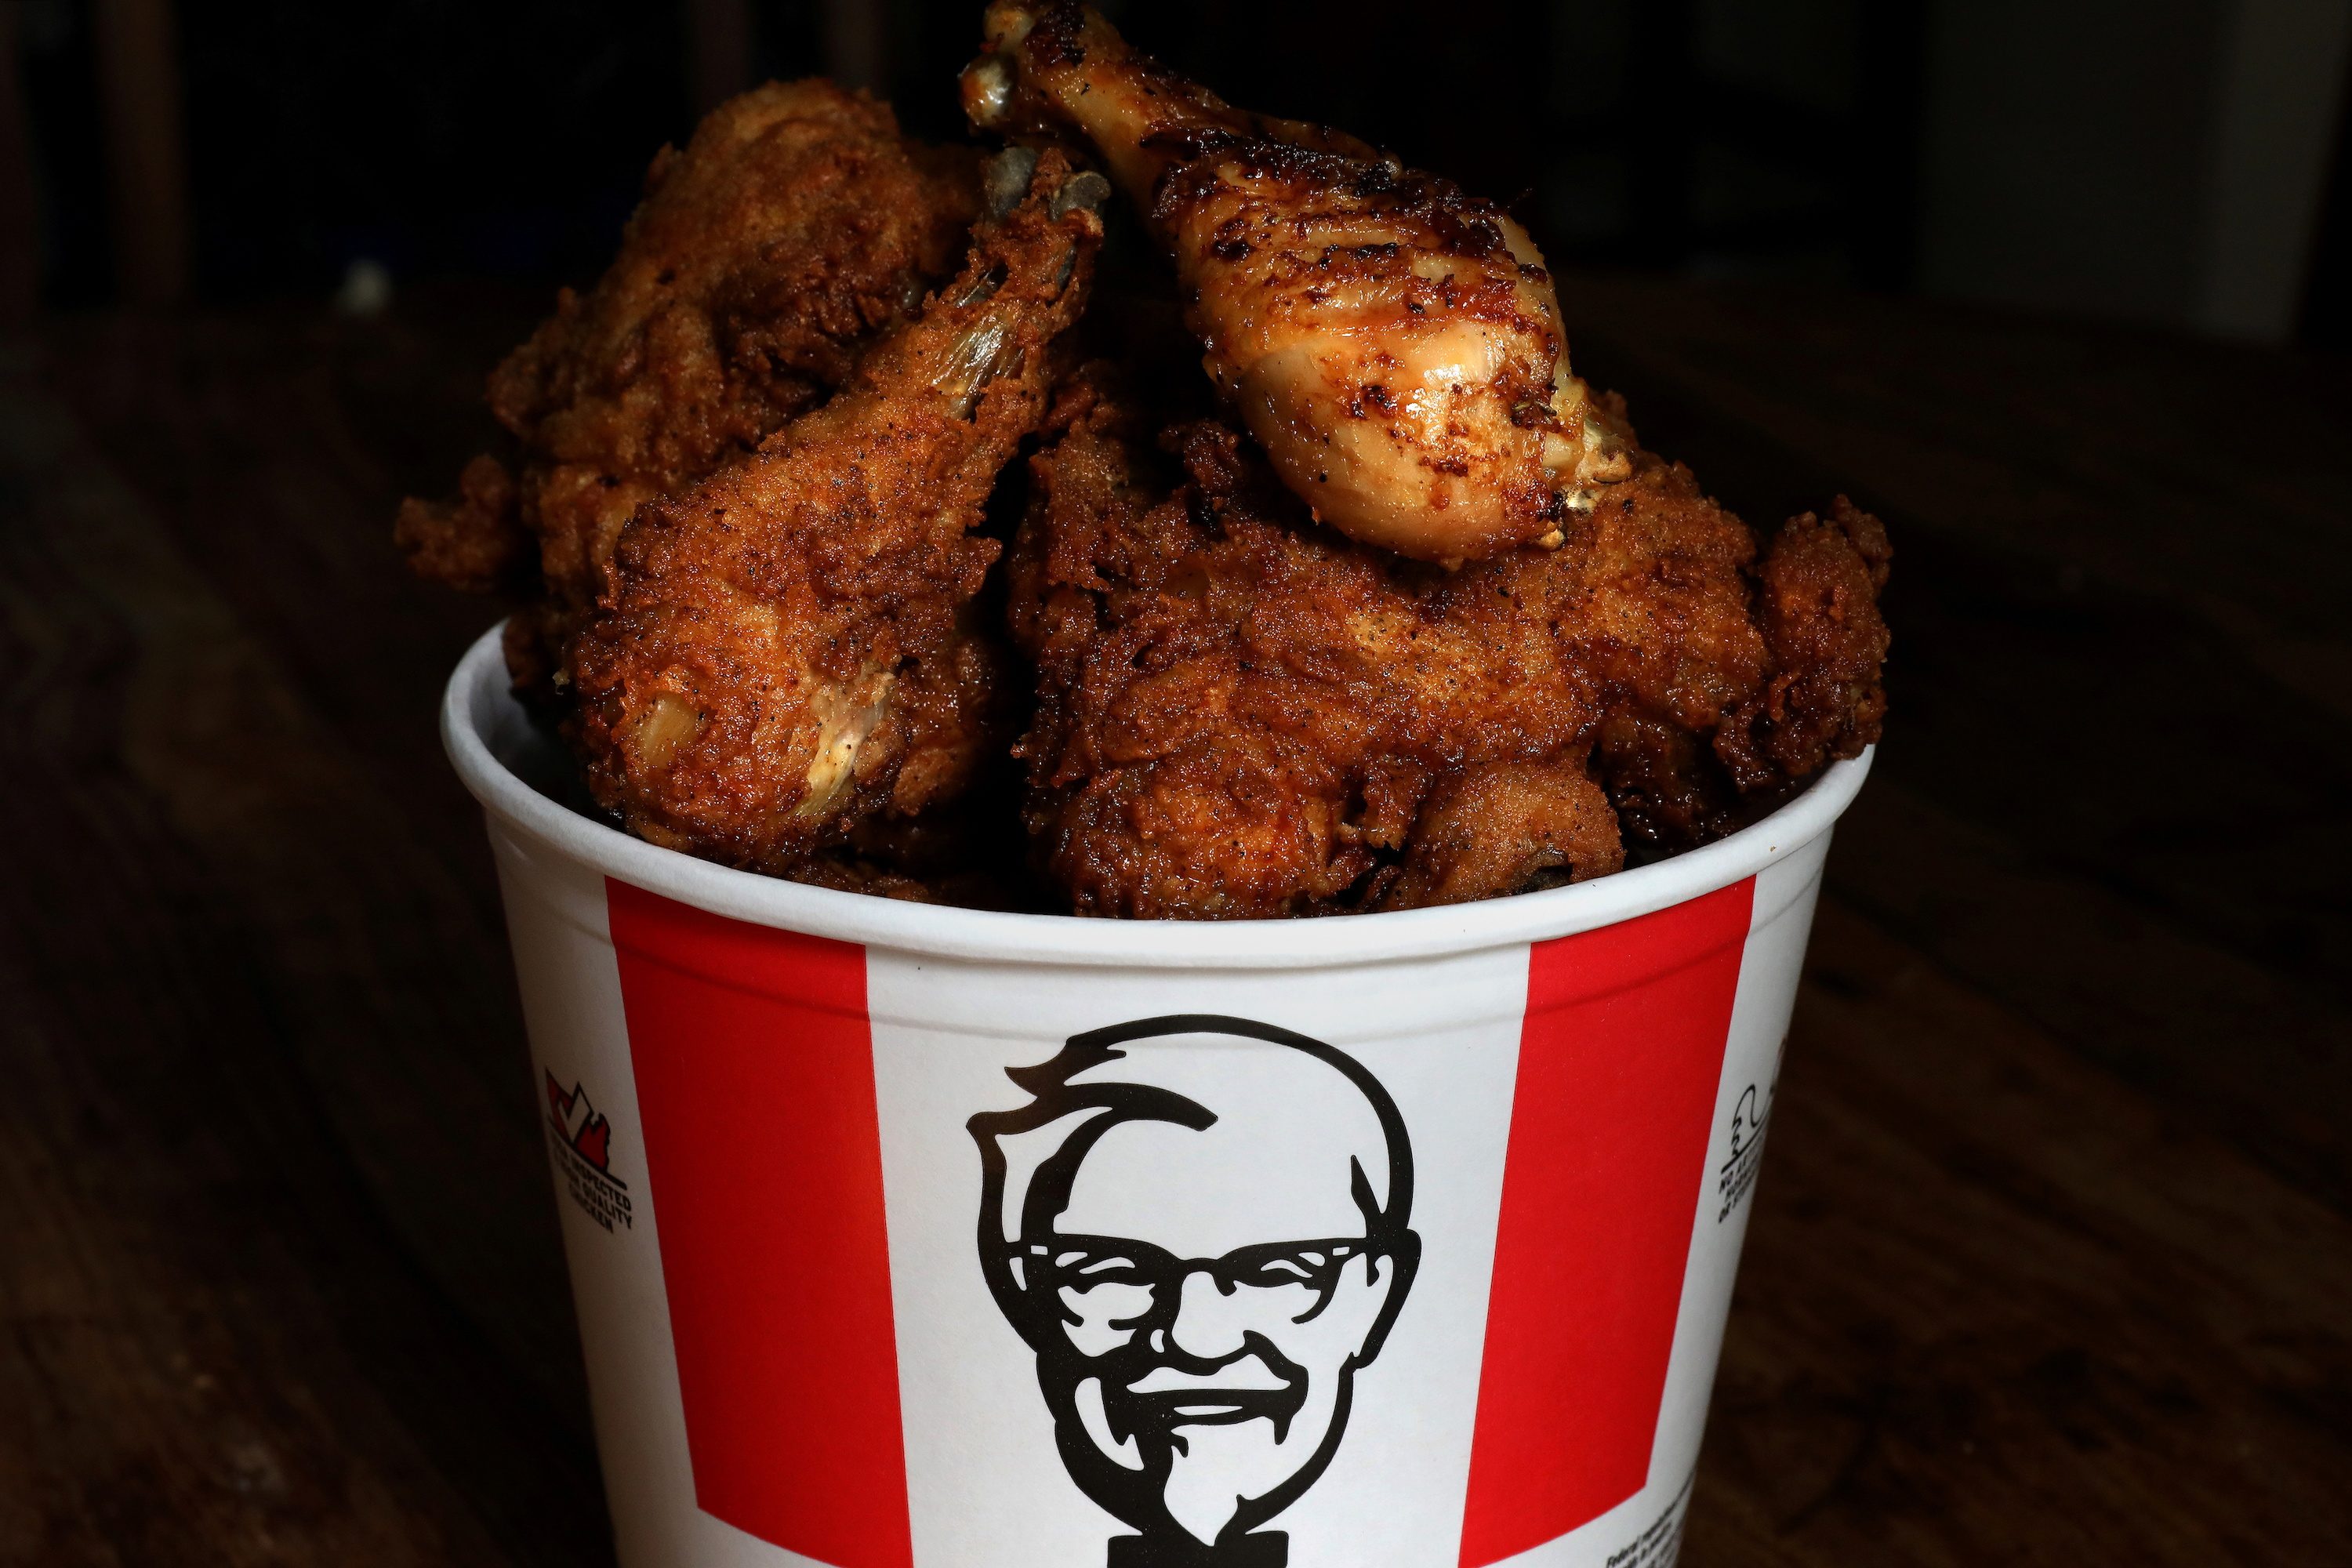 Online push helps KFC parent Yum beat revenue, profit estimates